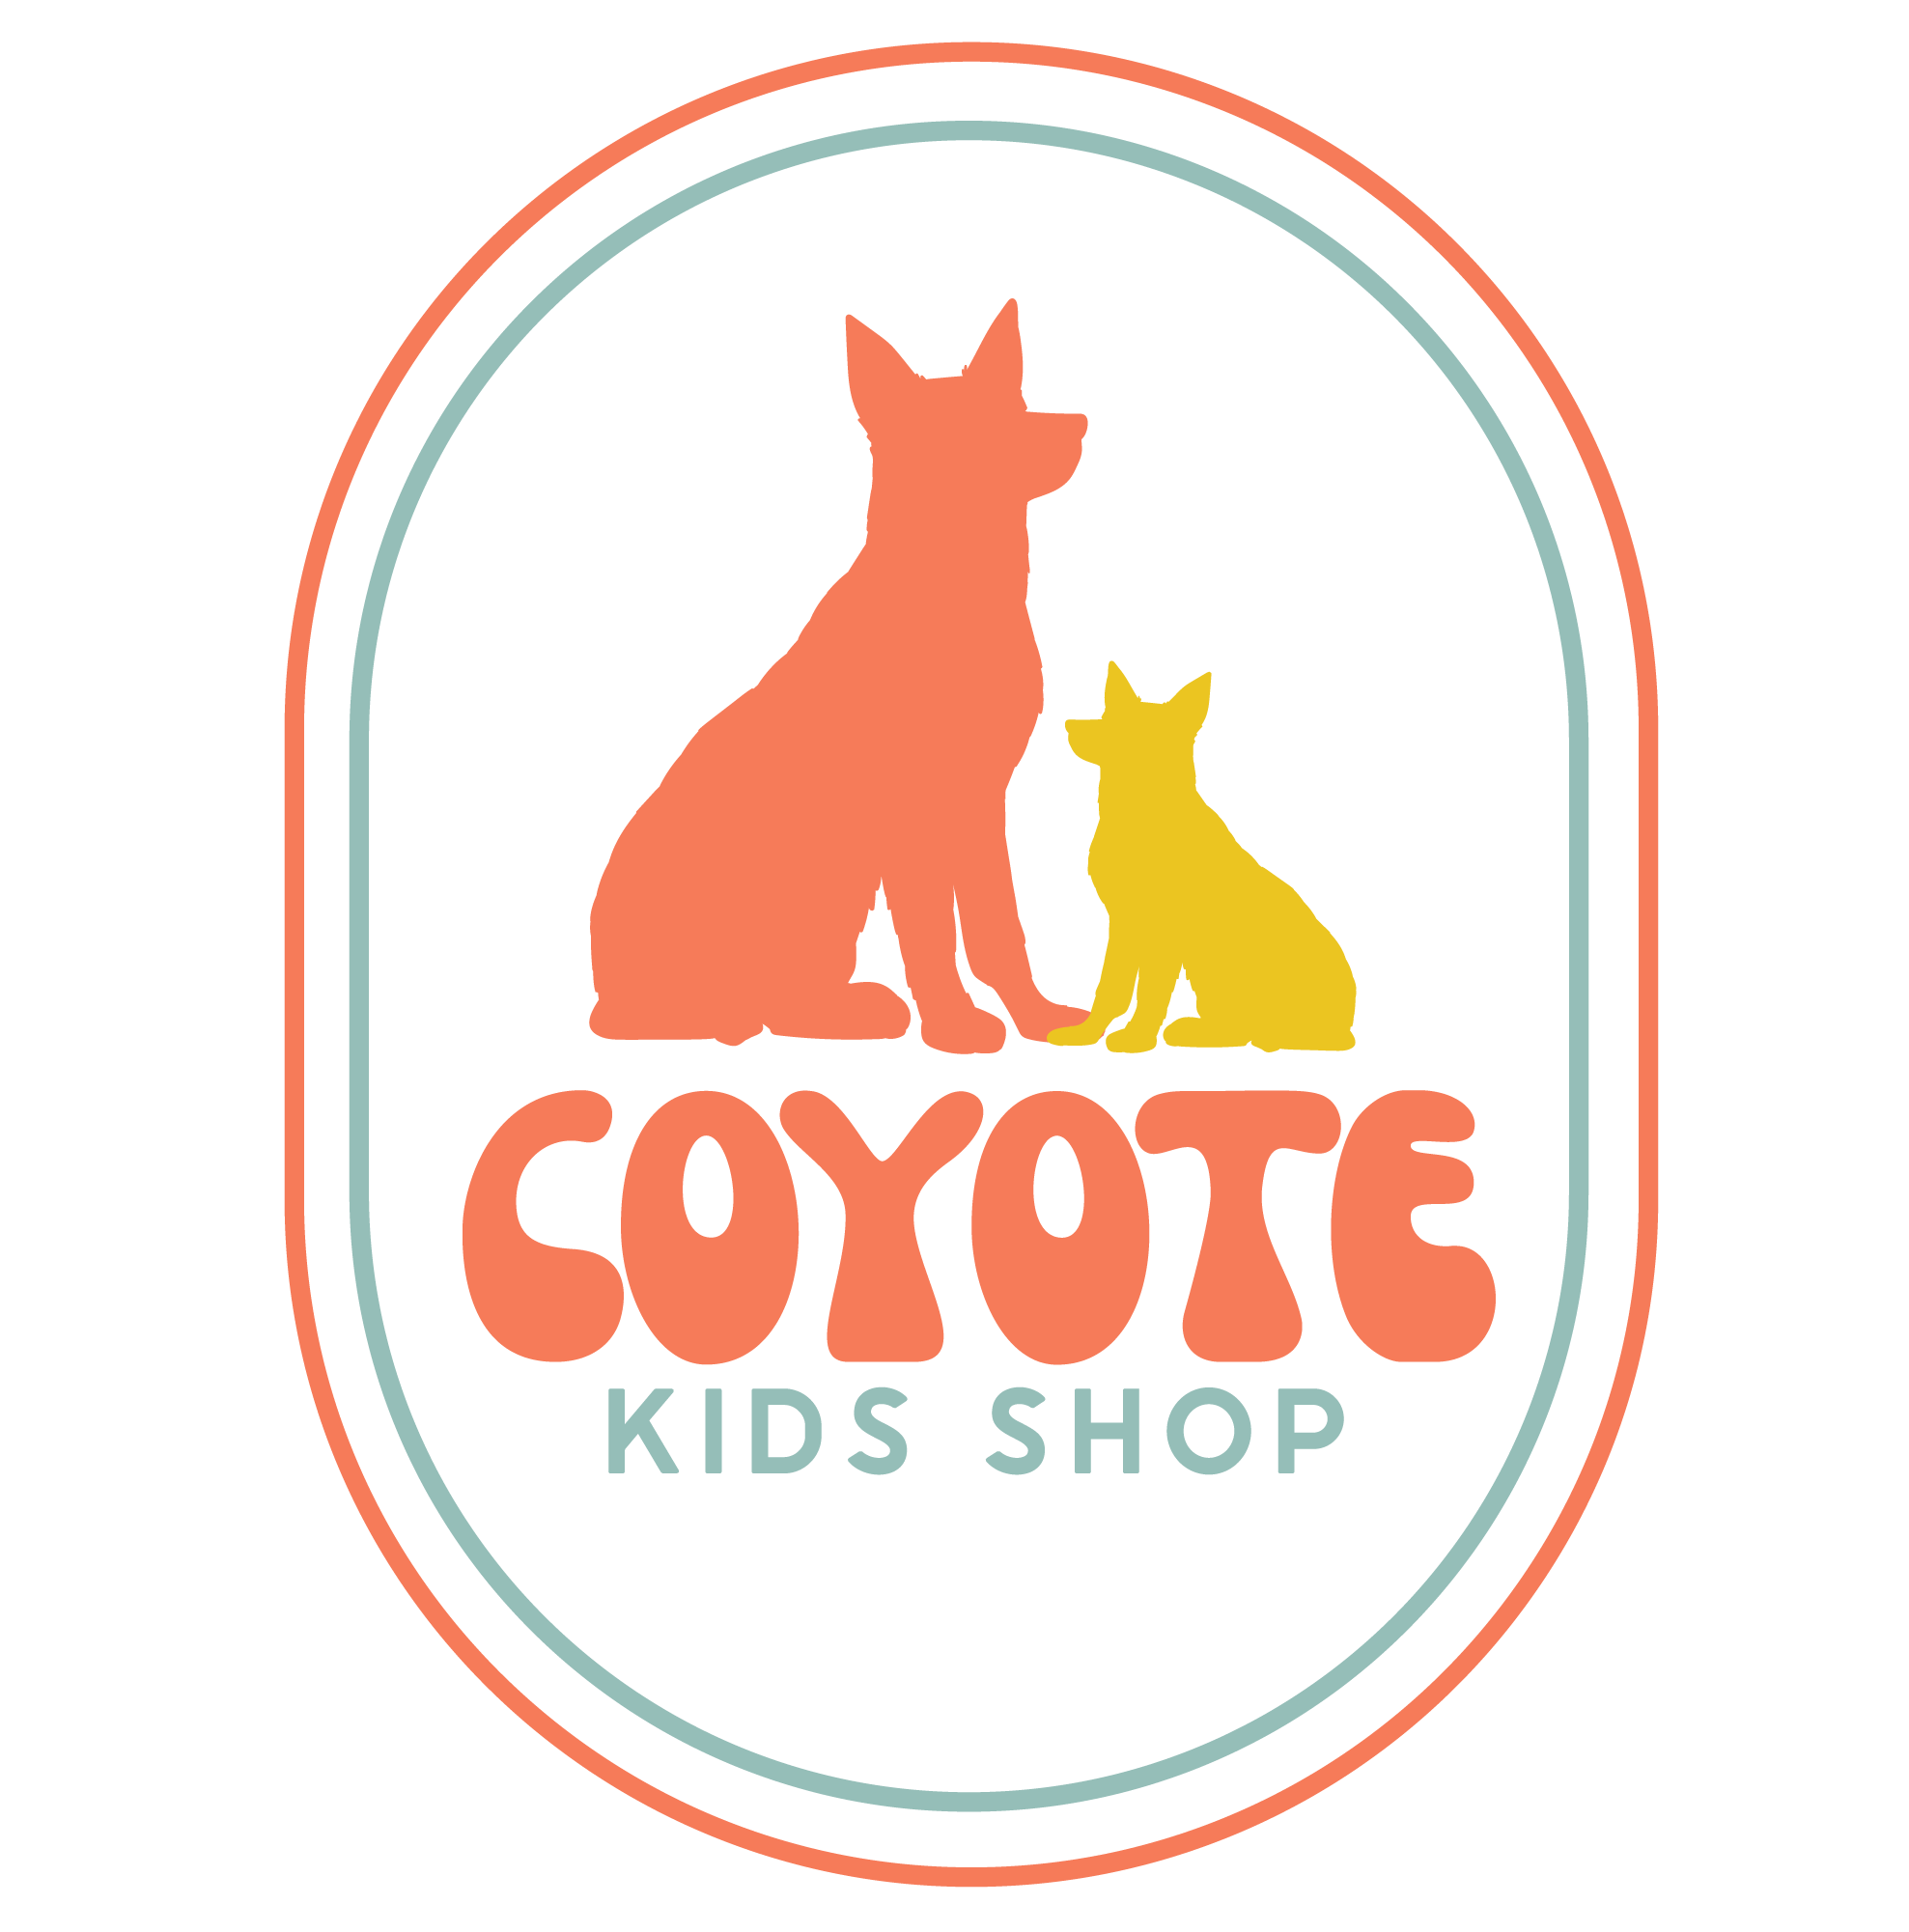 Coyote Kids Shop